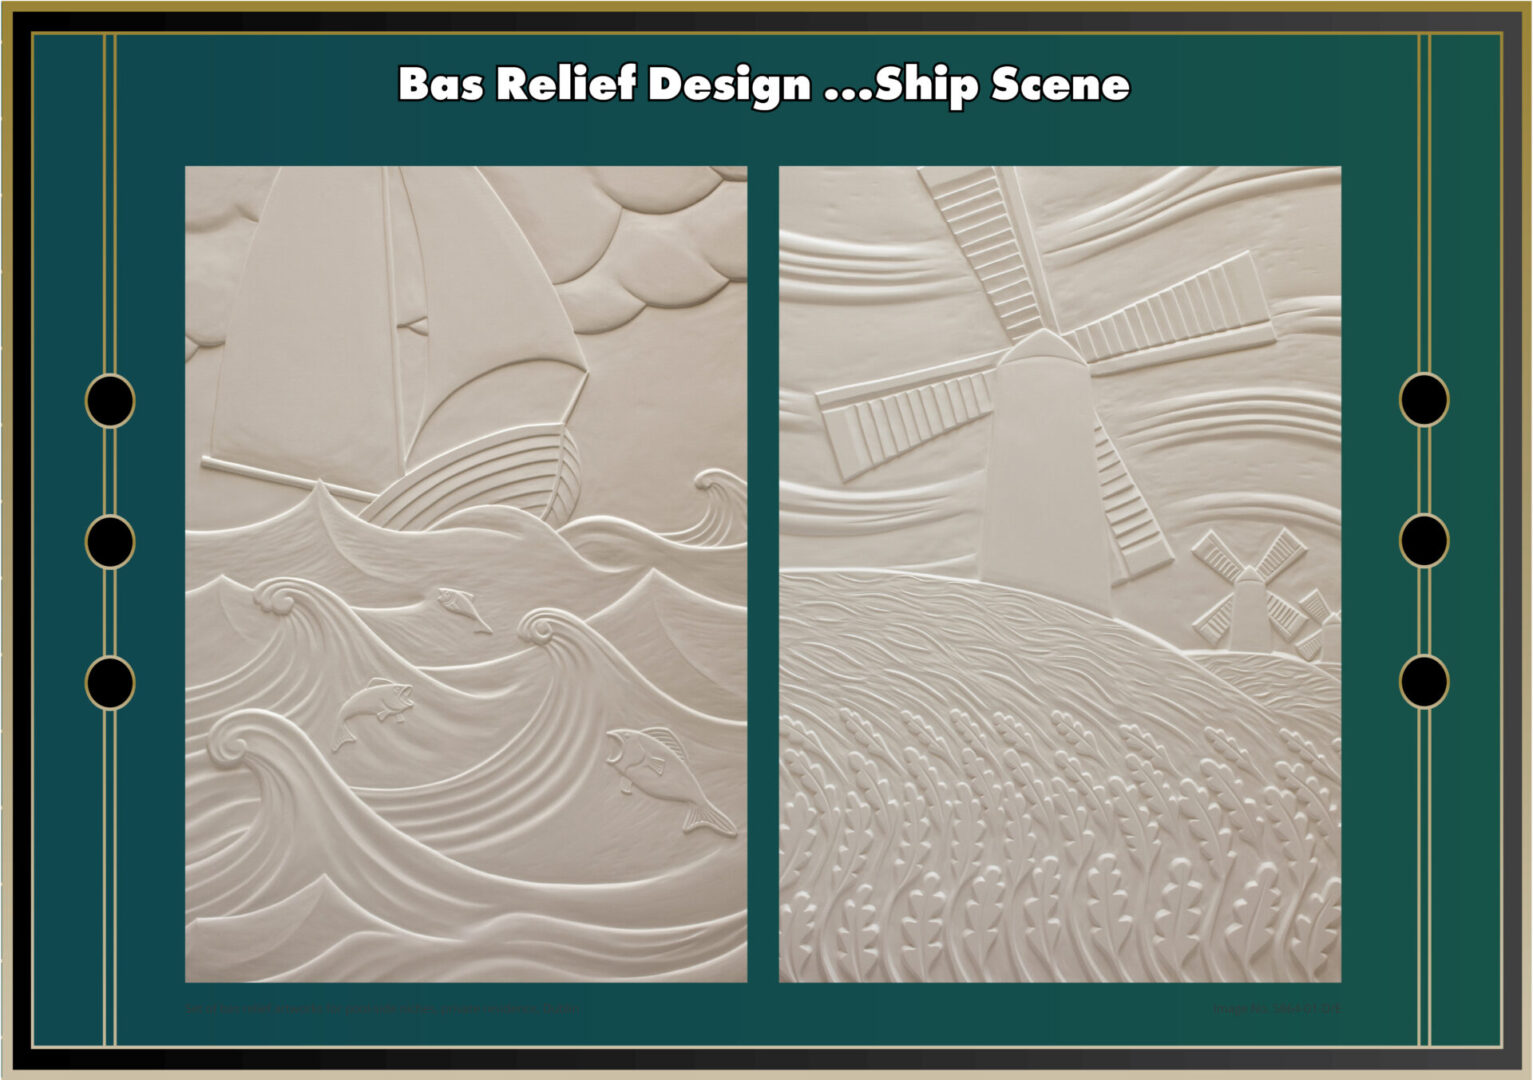 Bas Relief Design showing a ship scene